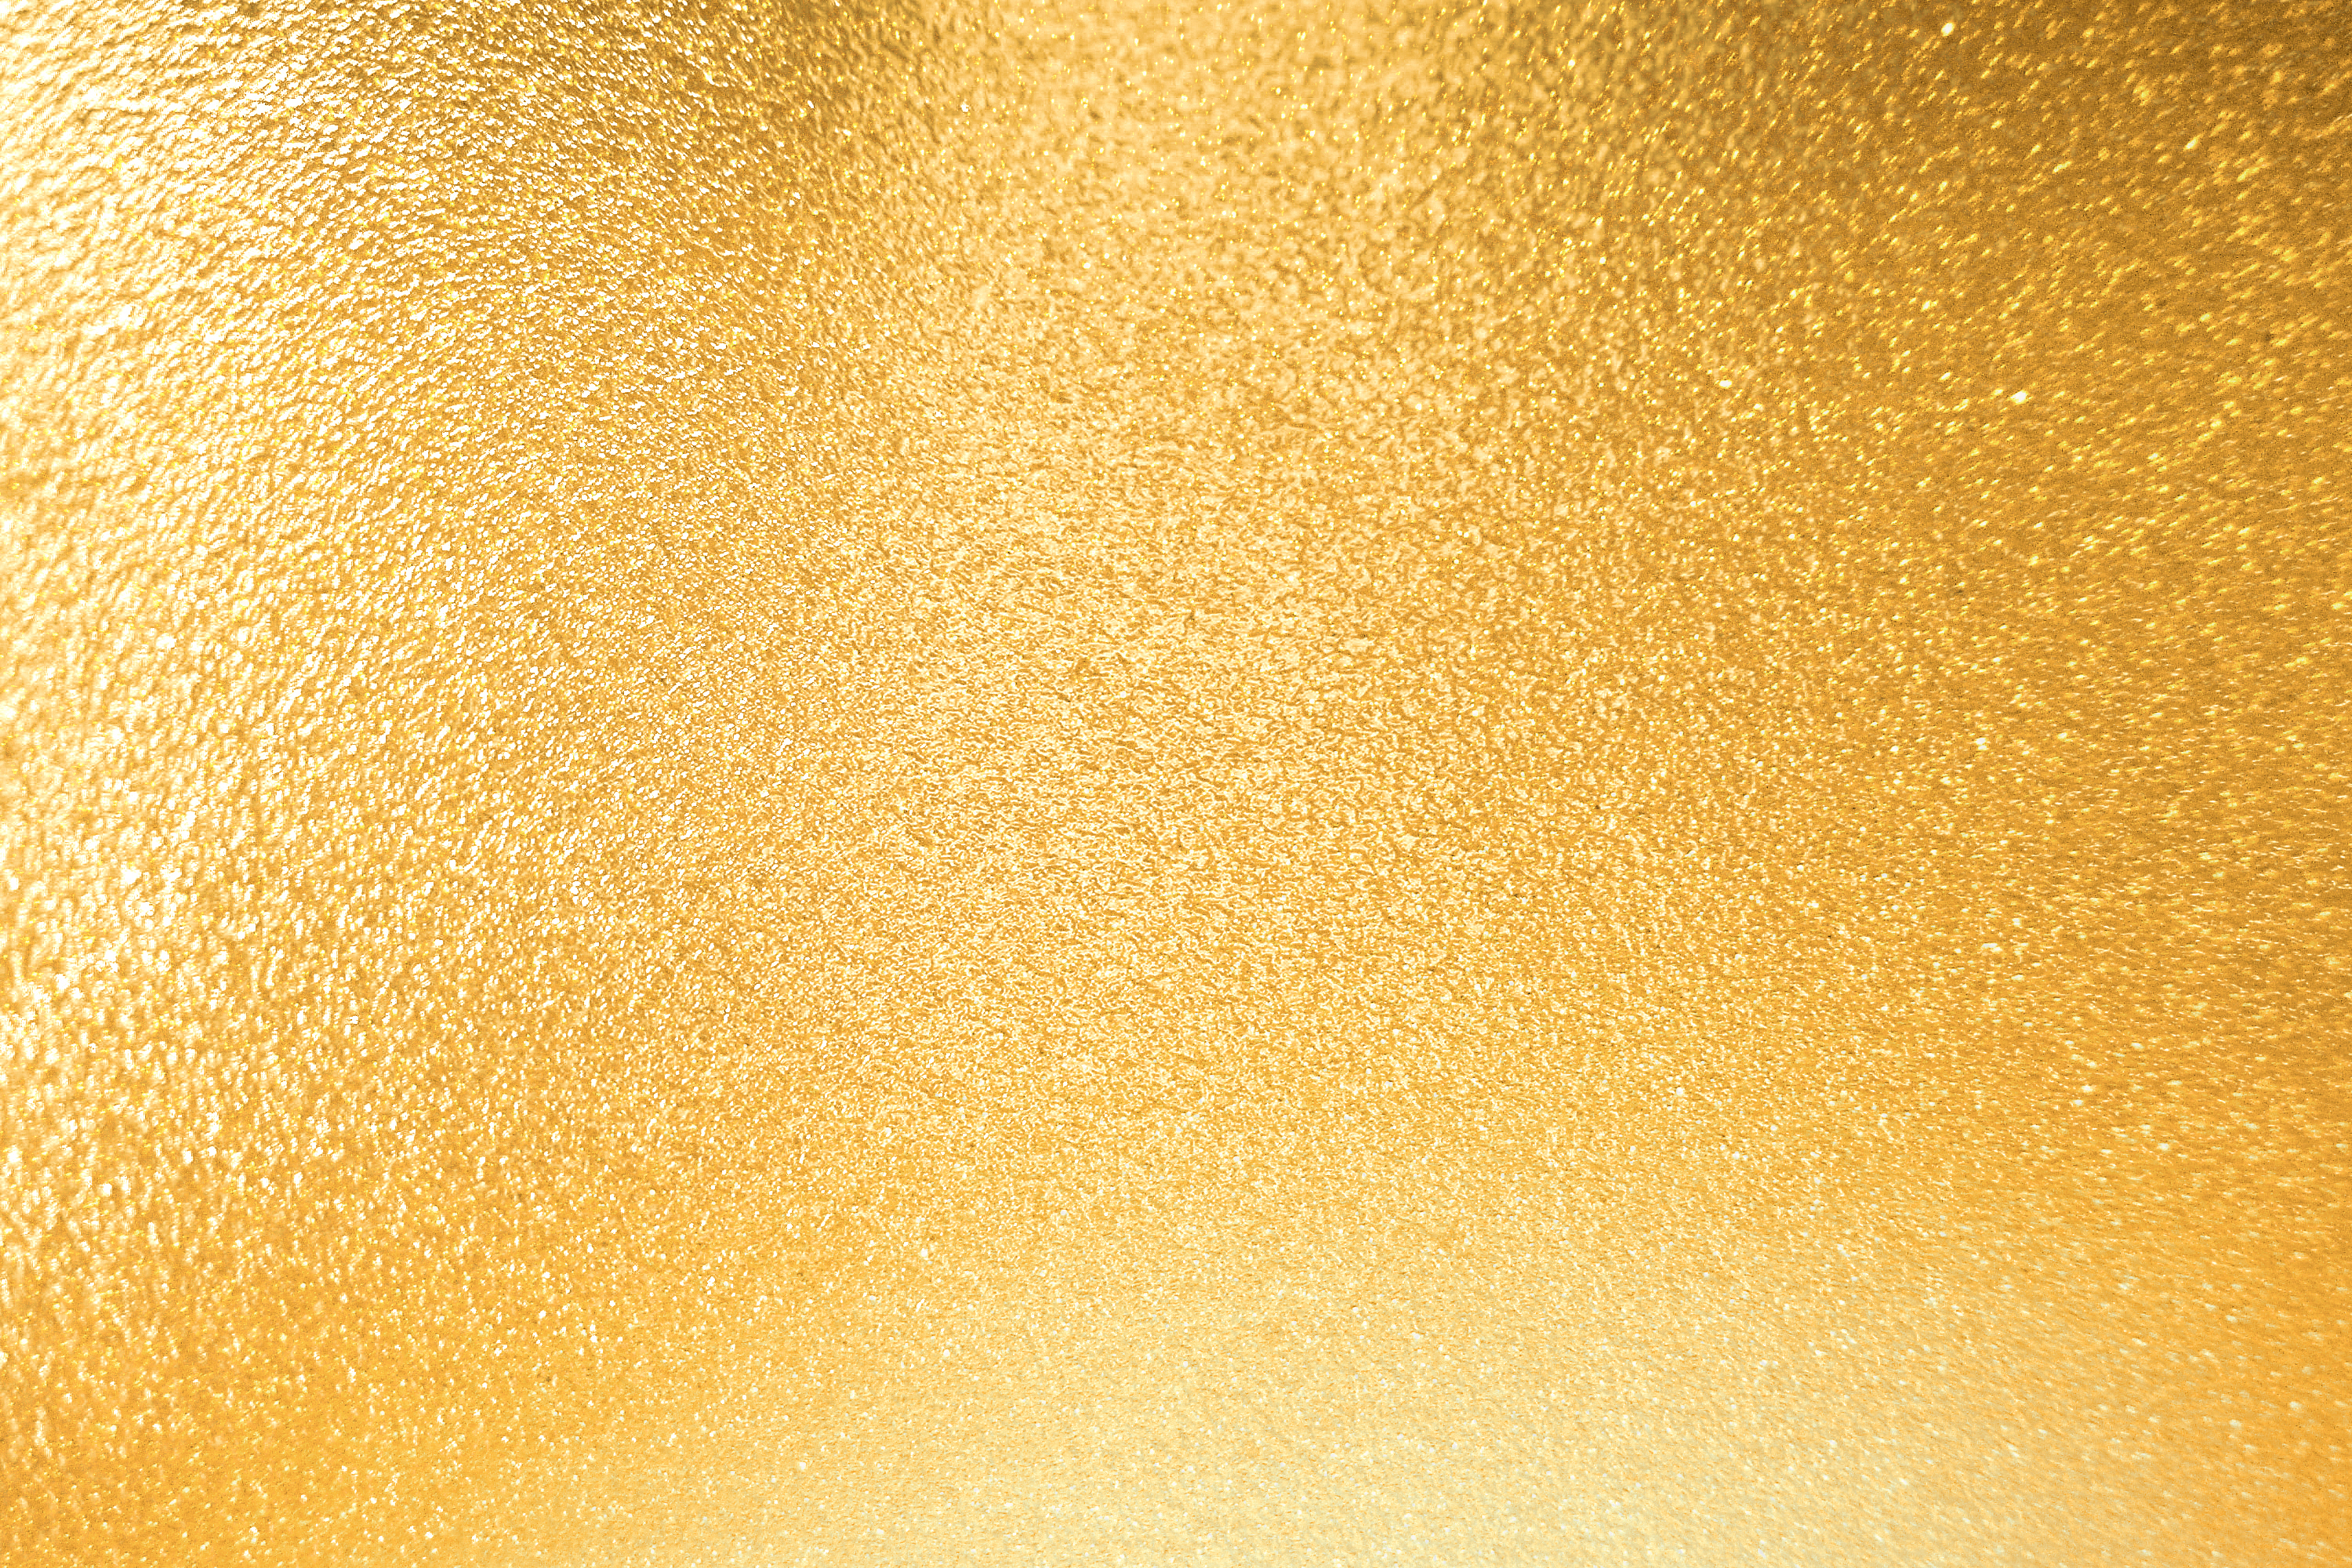 Gold Background Texture (6) by llexandro on DeviantArt